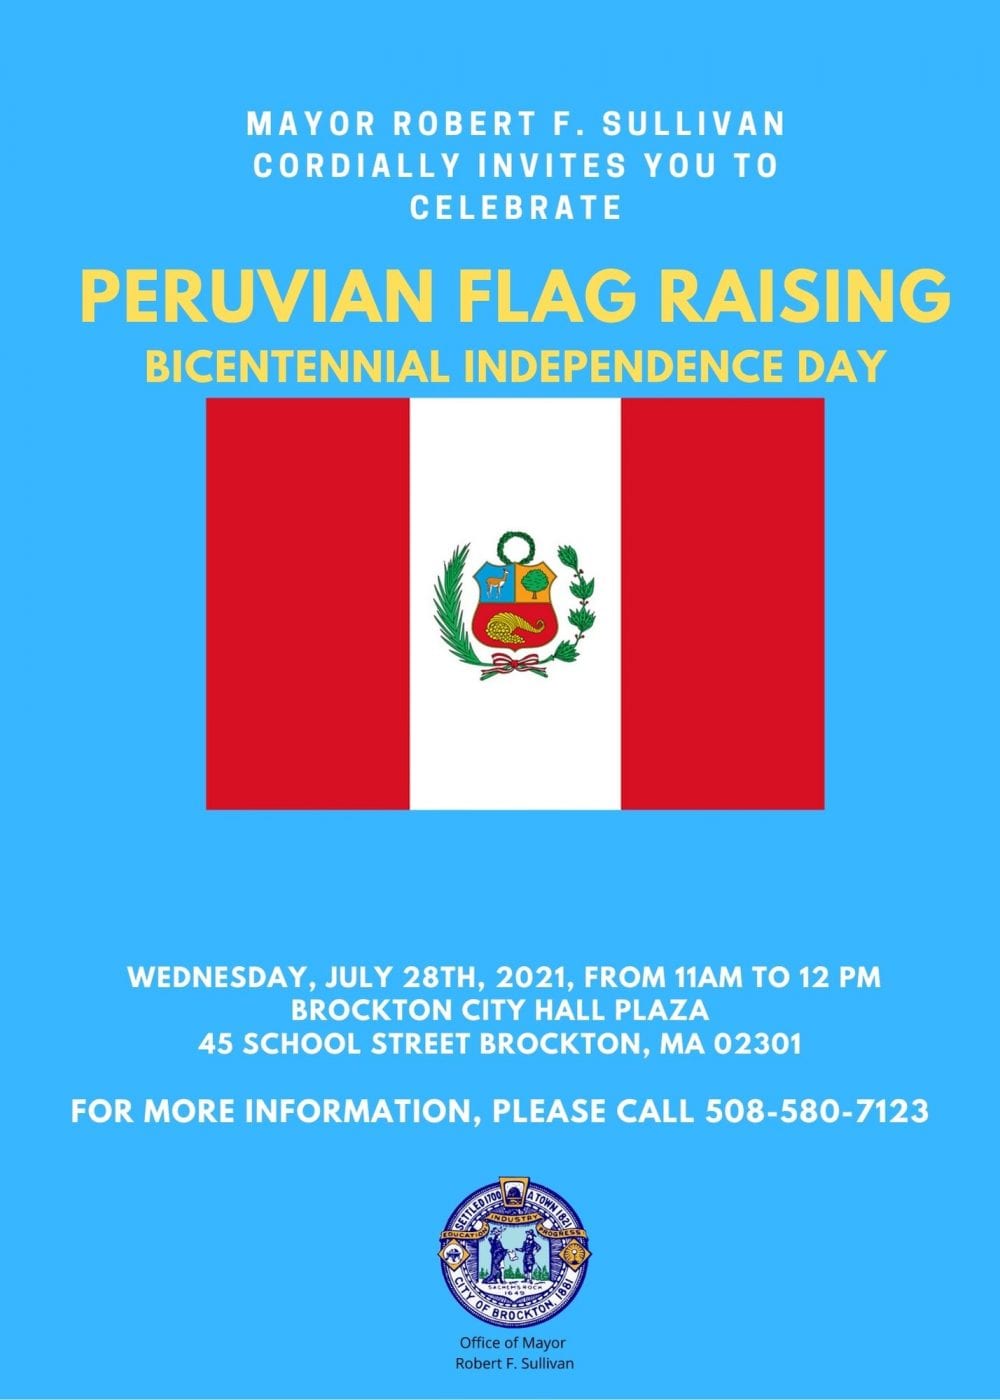 Peruvian Bicentennial Independence Day Flag-Raising - City of Brockton